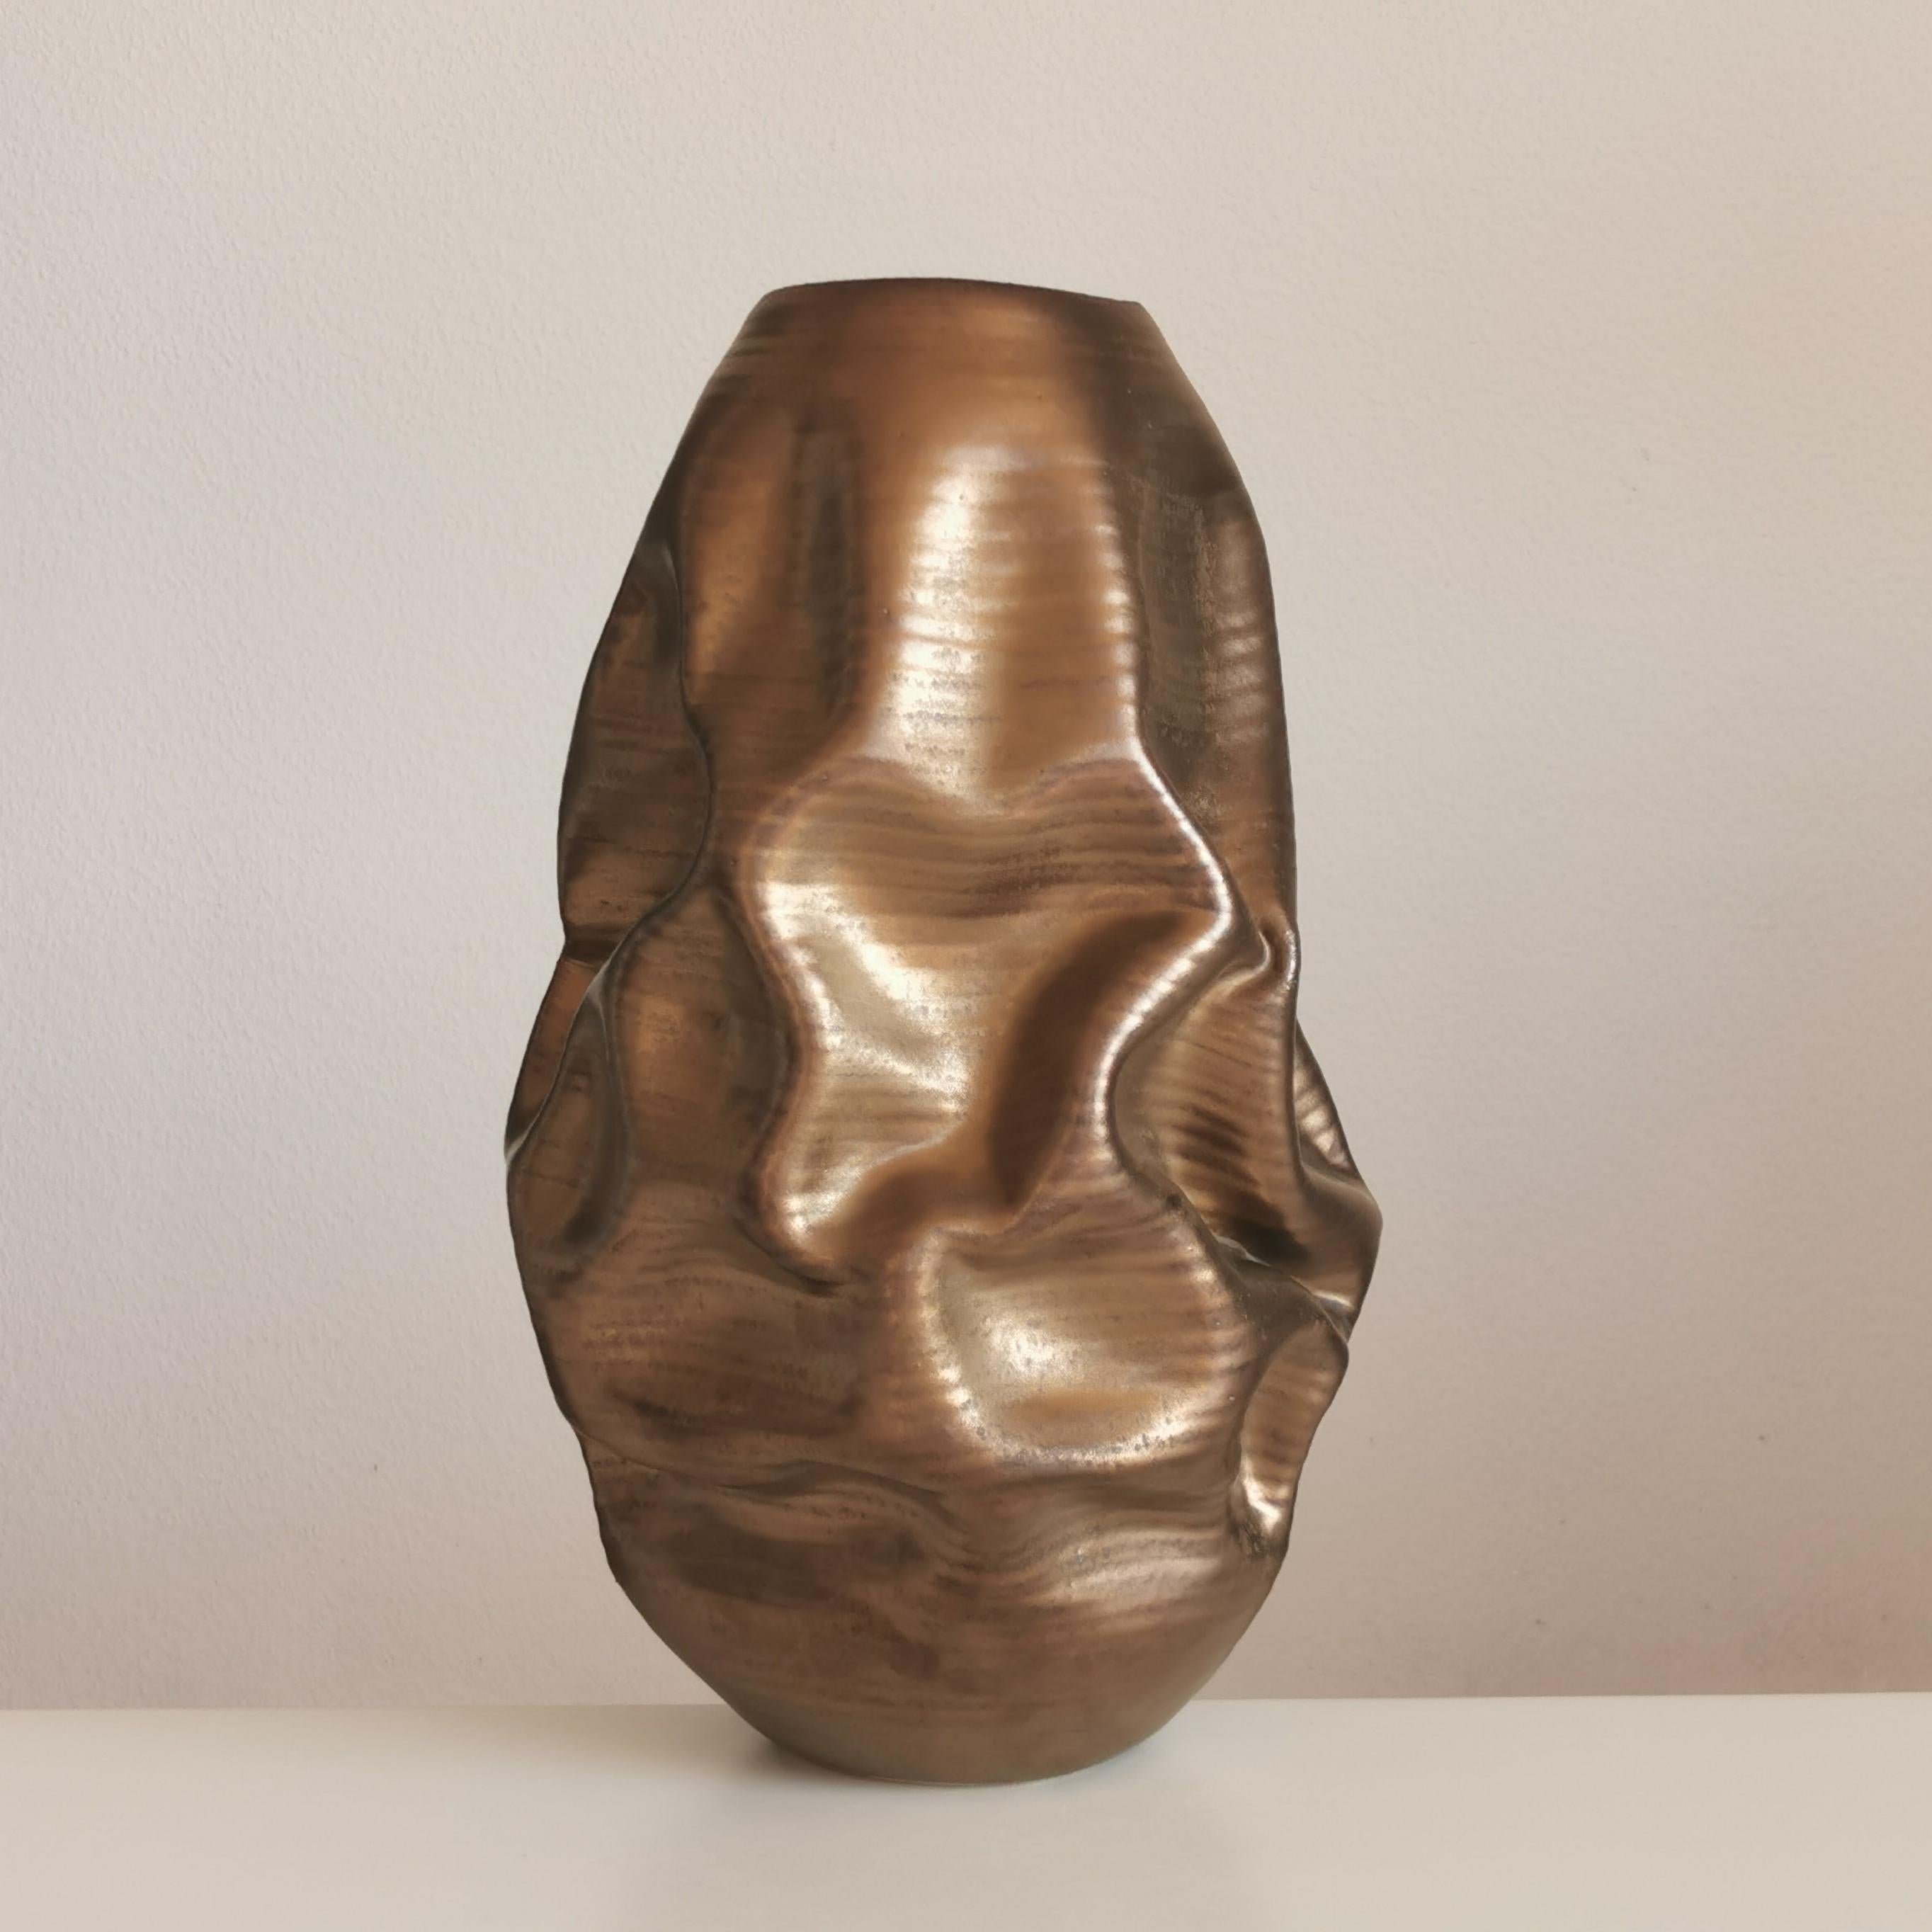 Tall Golden Crumpled Form N.97, Medium Ceramic Sculpture, Objet D'Art 2